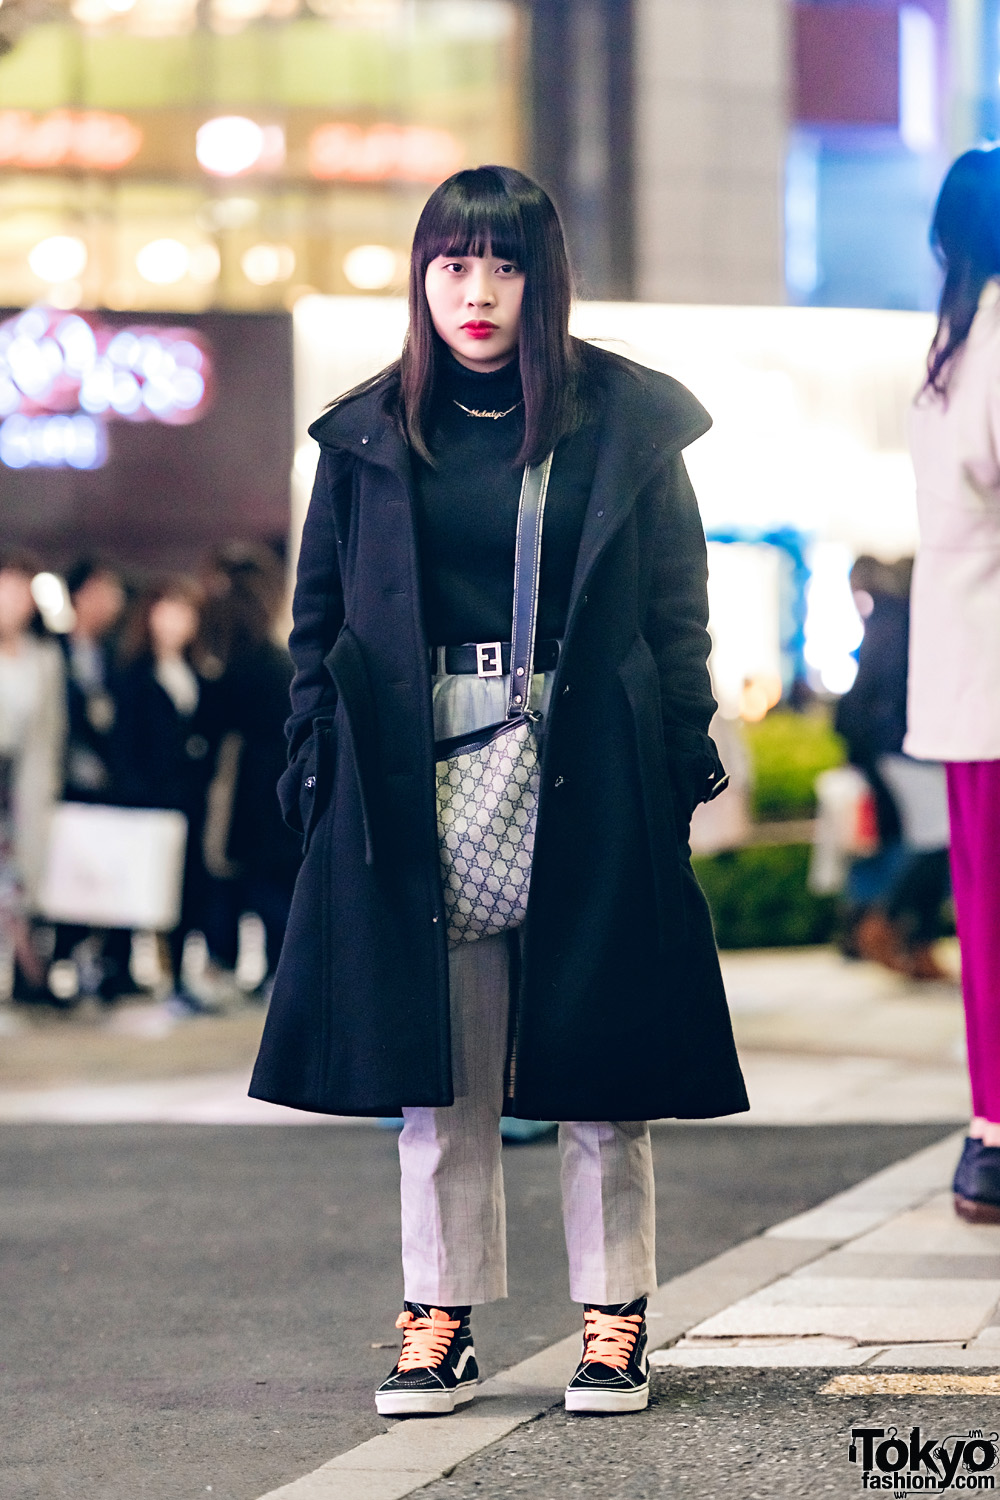 Japanese Chic Minimalist Winter Fashion w/ Burberry, Lacoste, Vans & Gucci